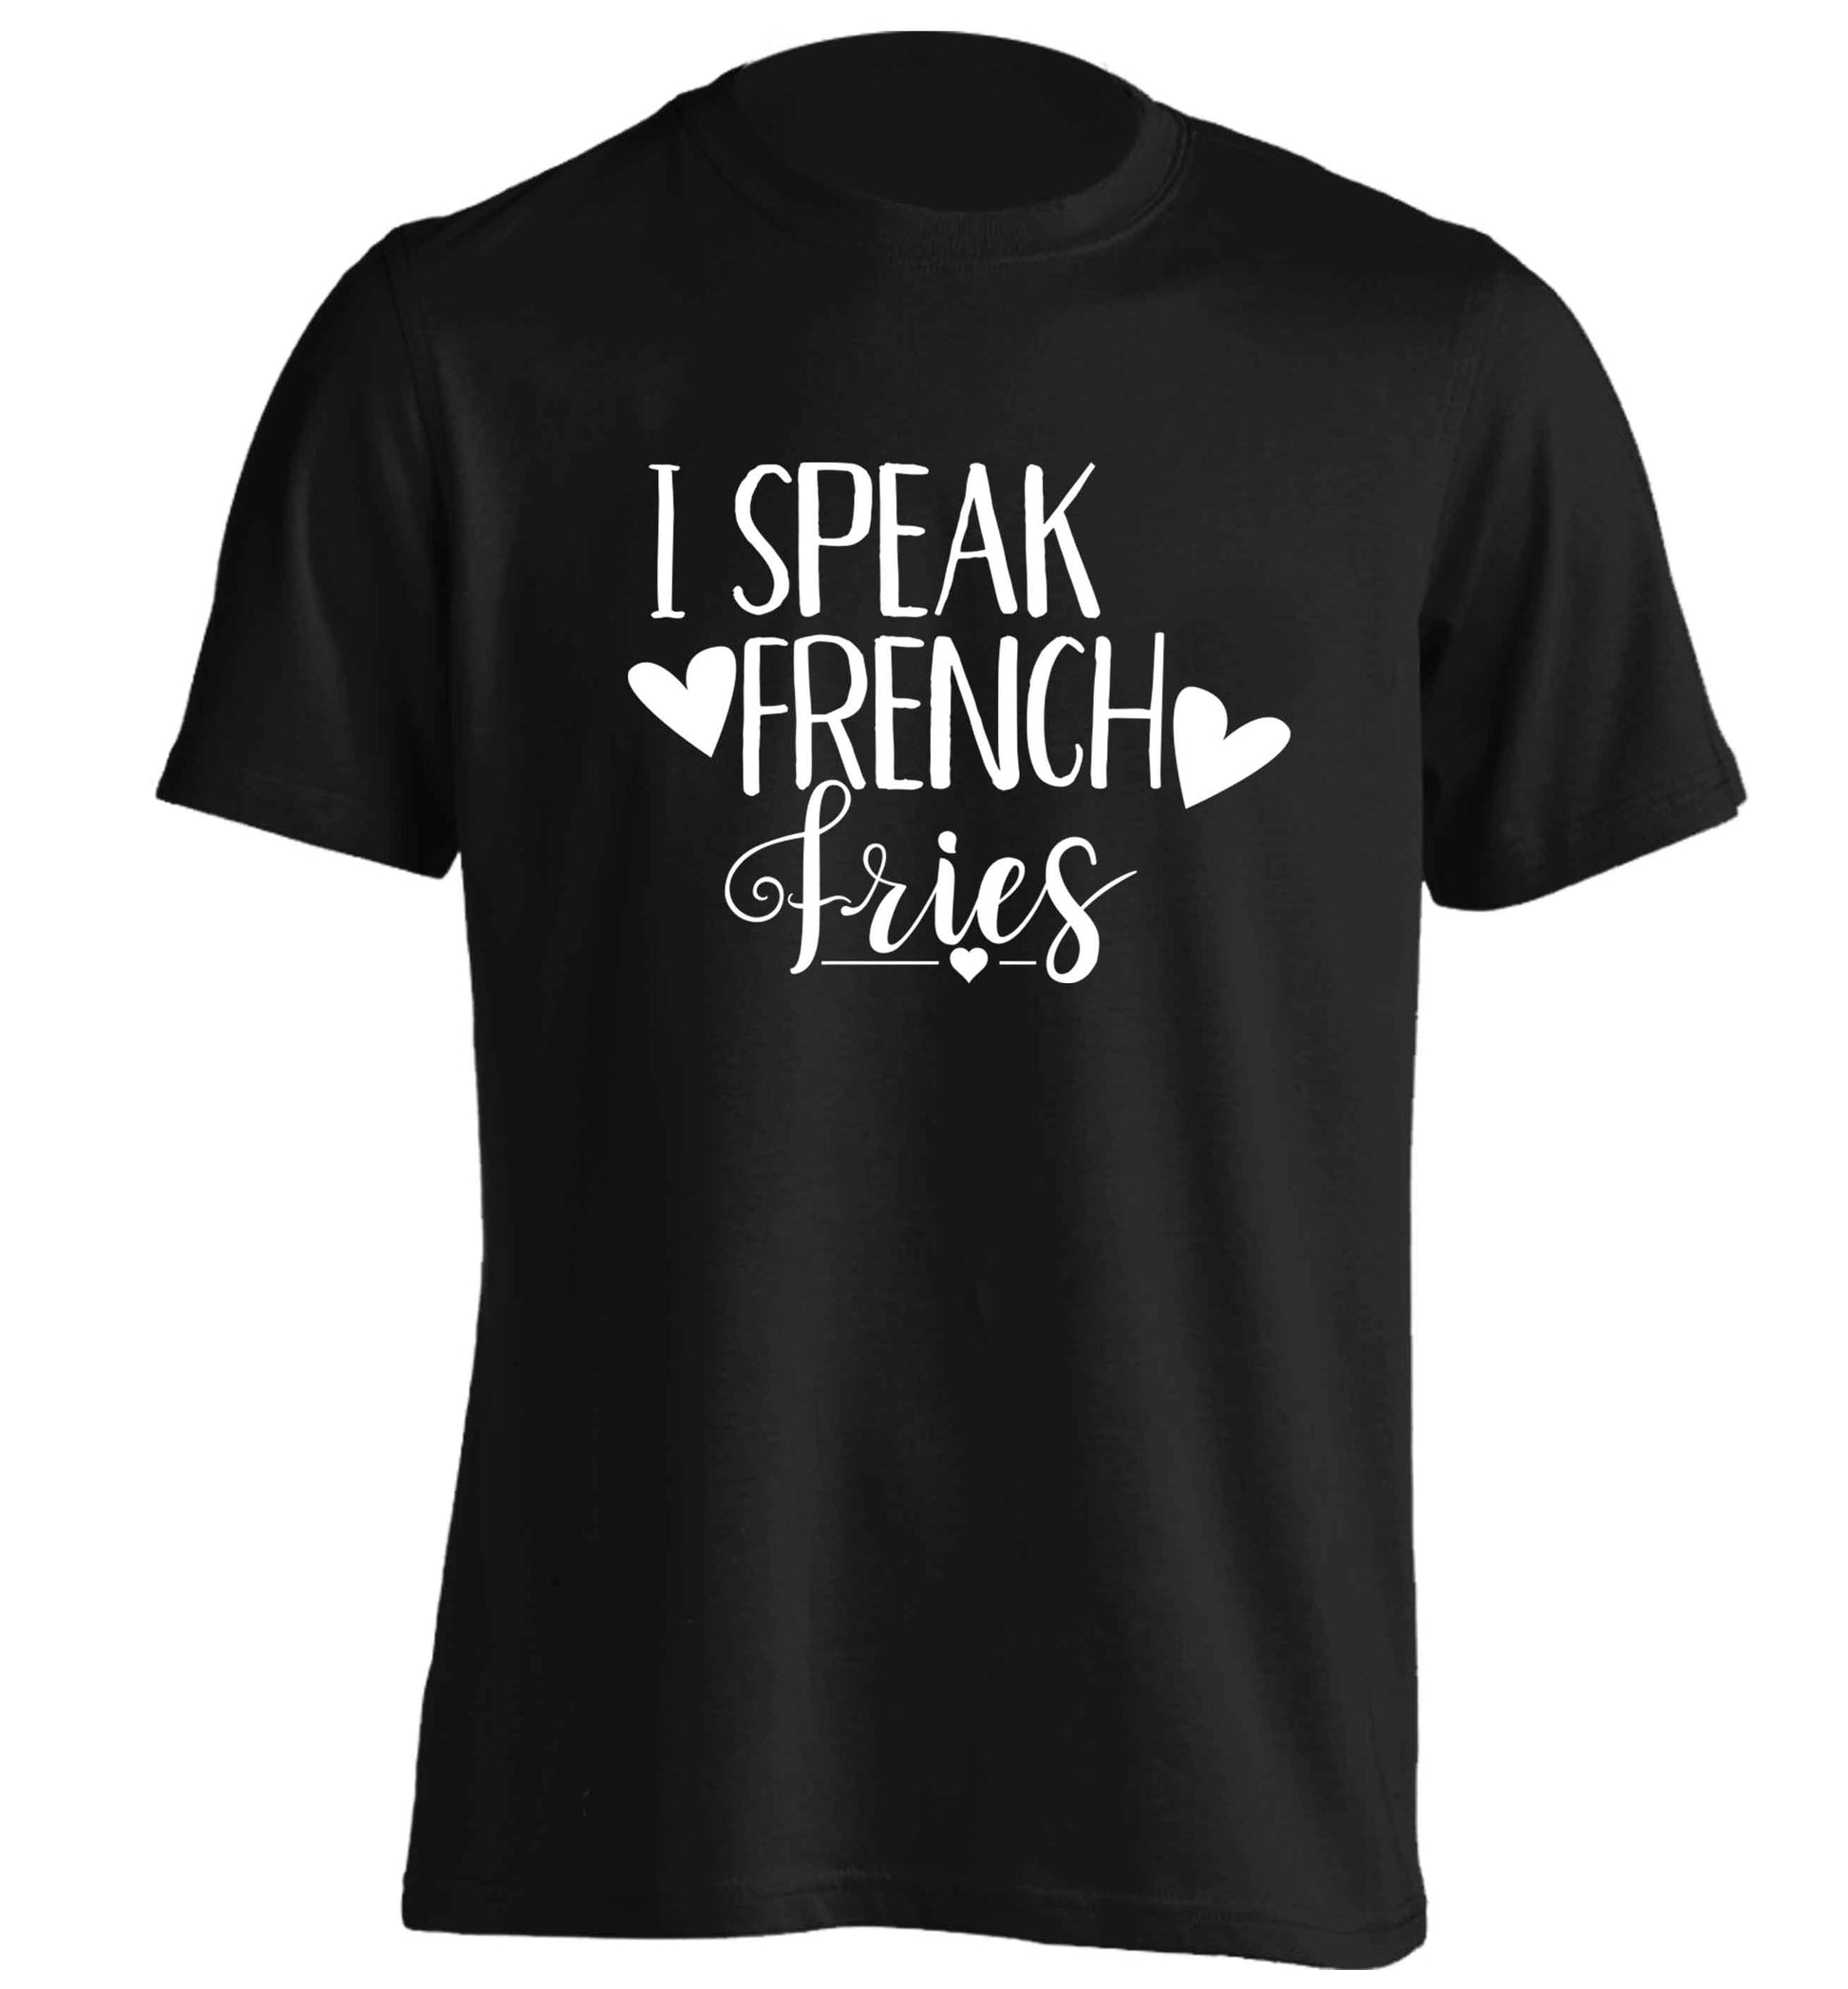 I speak French fries adults unisex black Tshirt 2XL